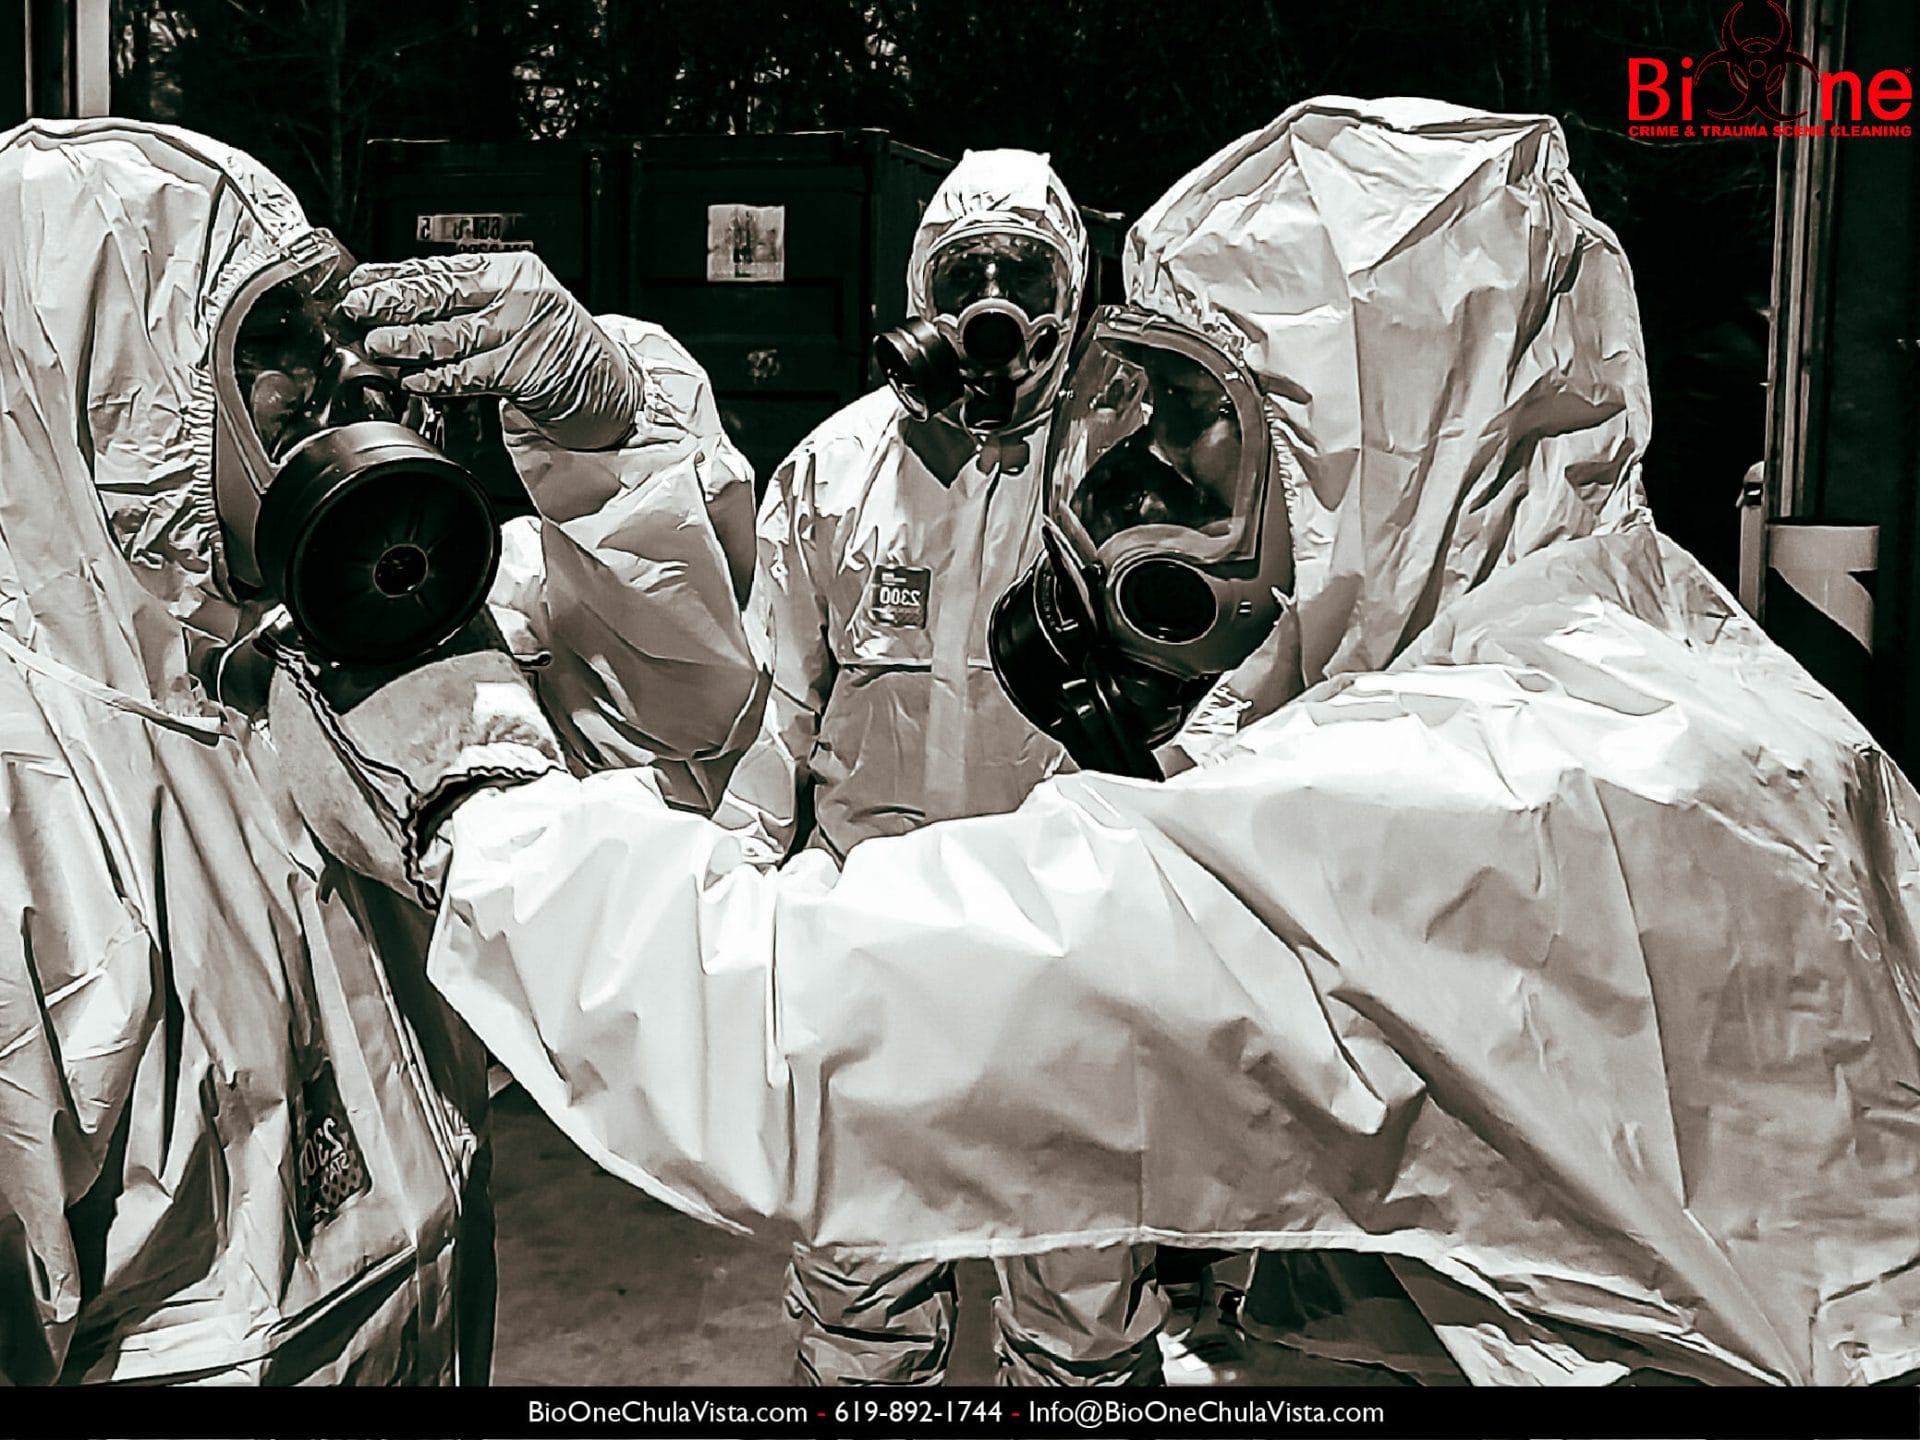 Bio-One technicians in full hazmat suits. Photo credit: Bio-One of Chula Vista.